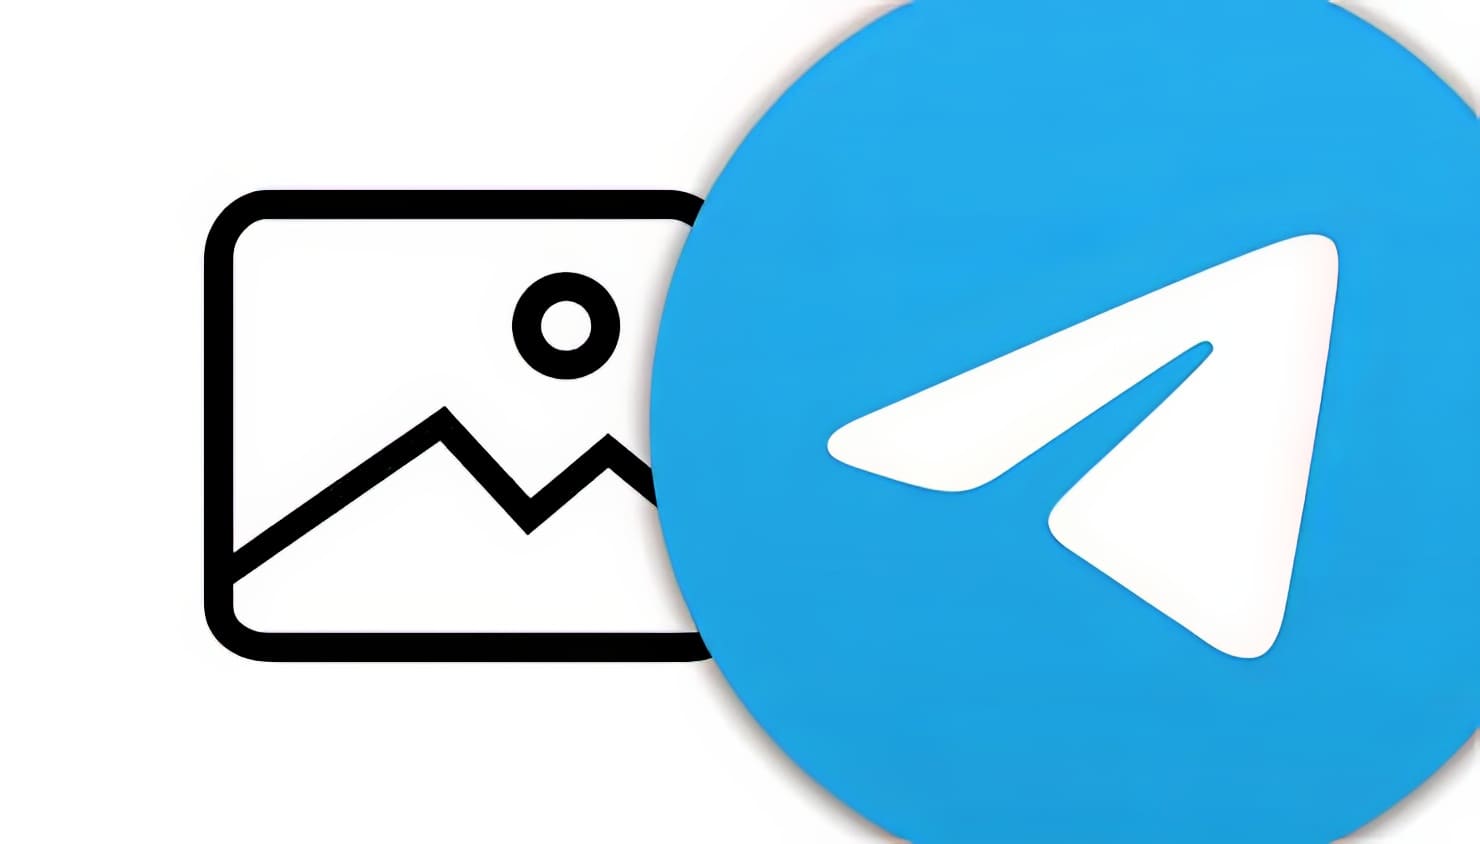 Как отправлять фото и видео через Telegram без потери качества на iPhone, Android, Mac или Windows